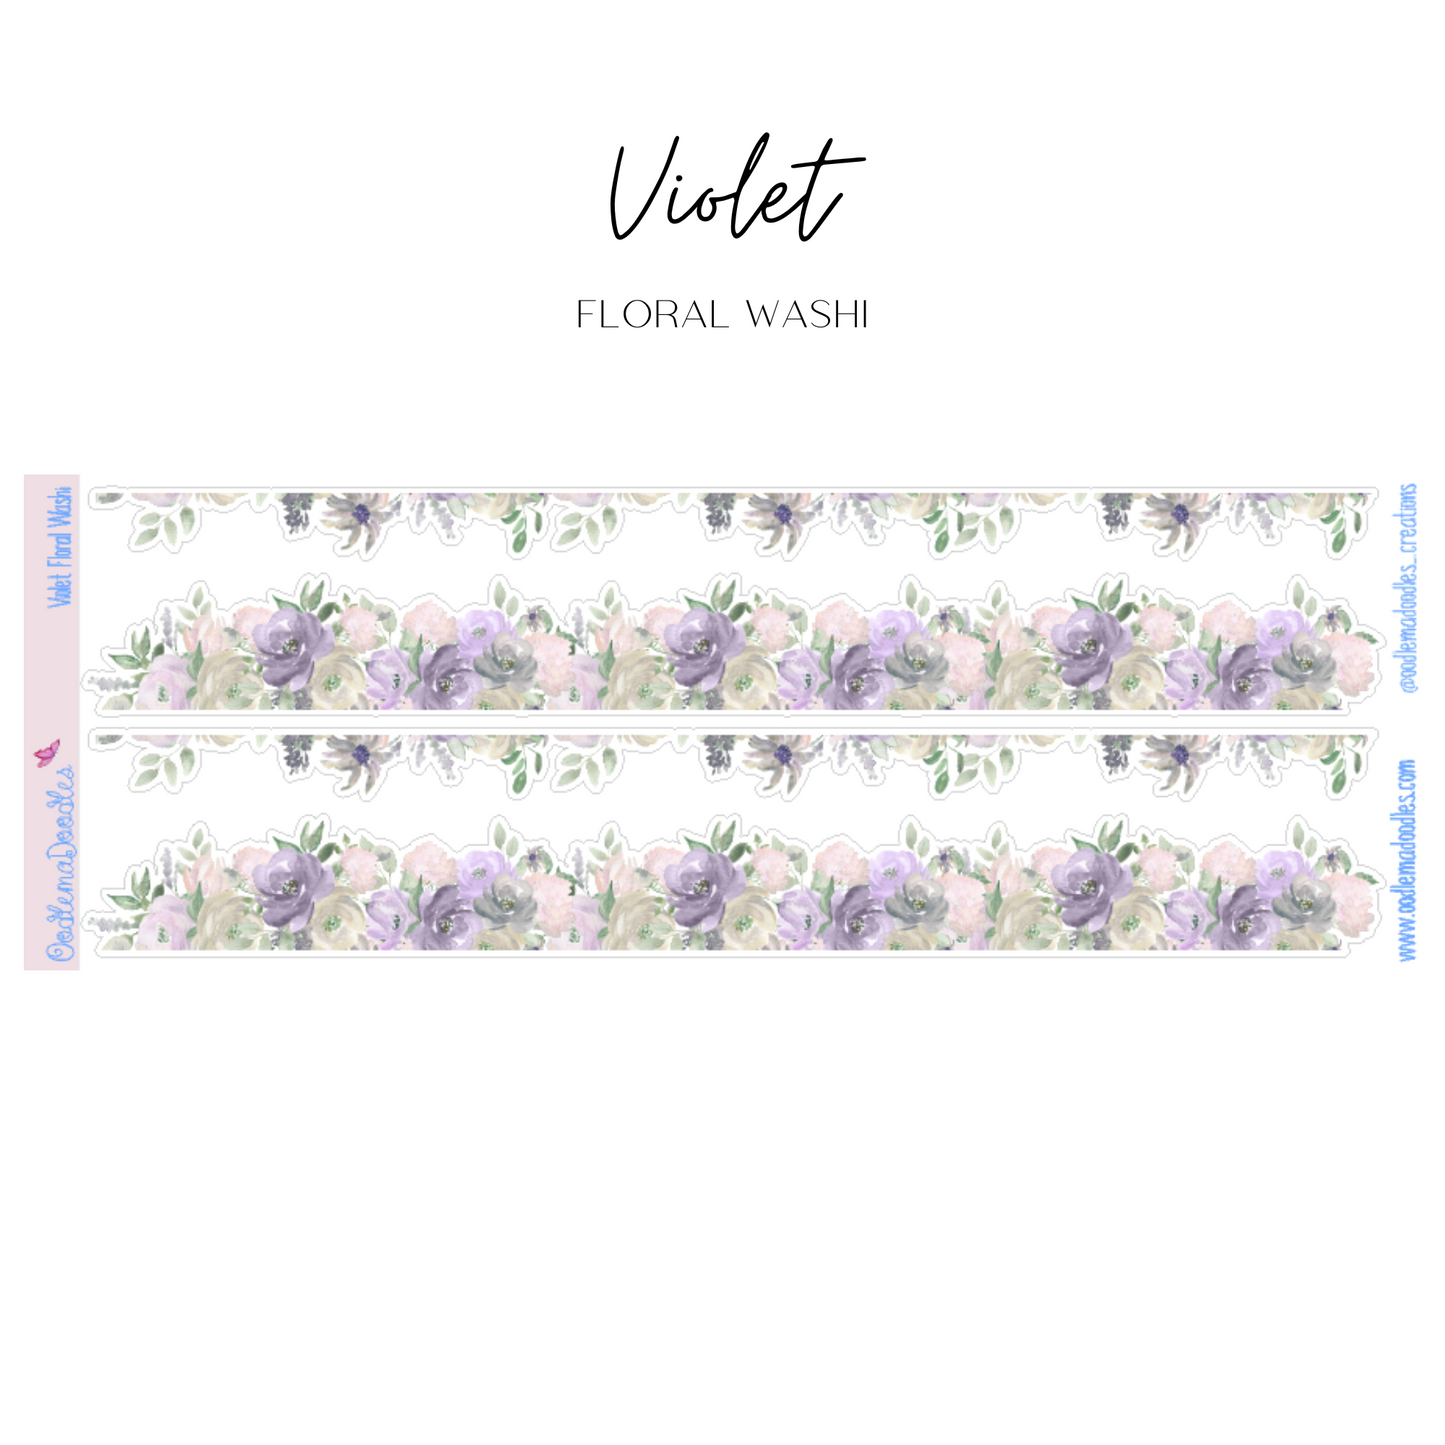 Violet Addon & Extra Washi Options